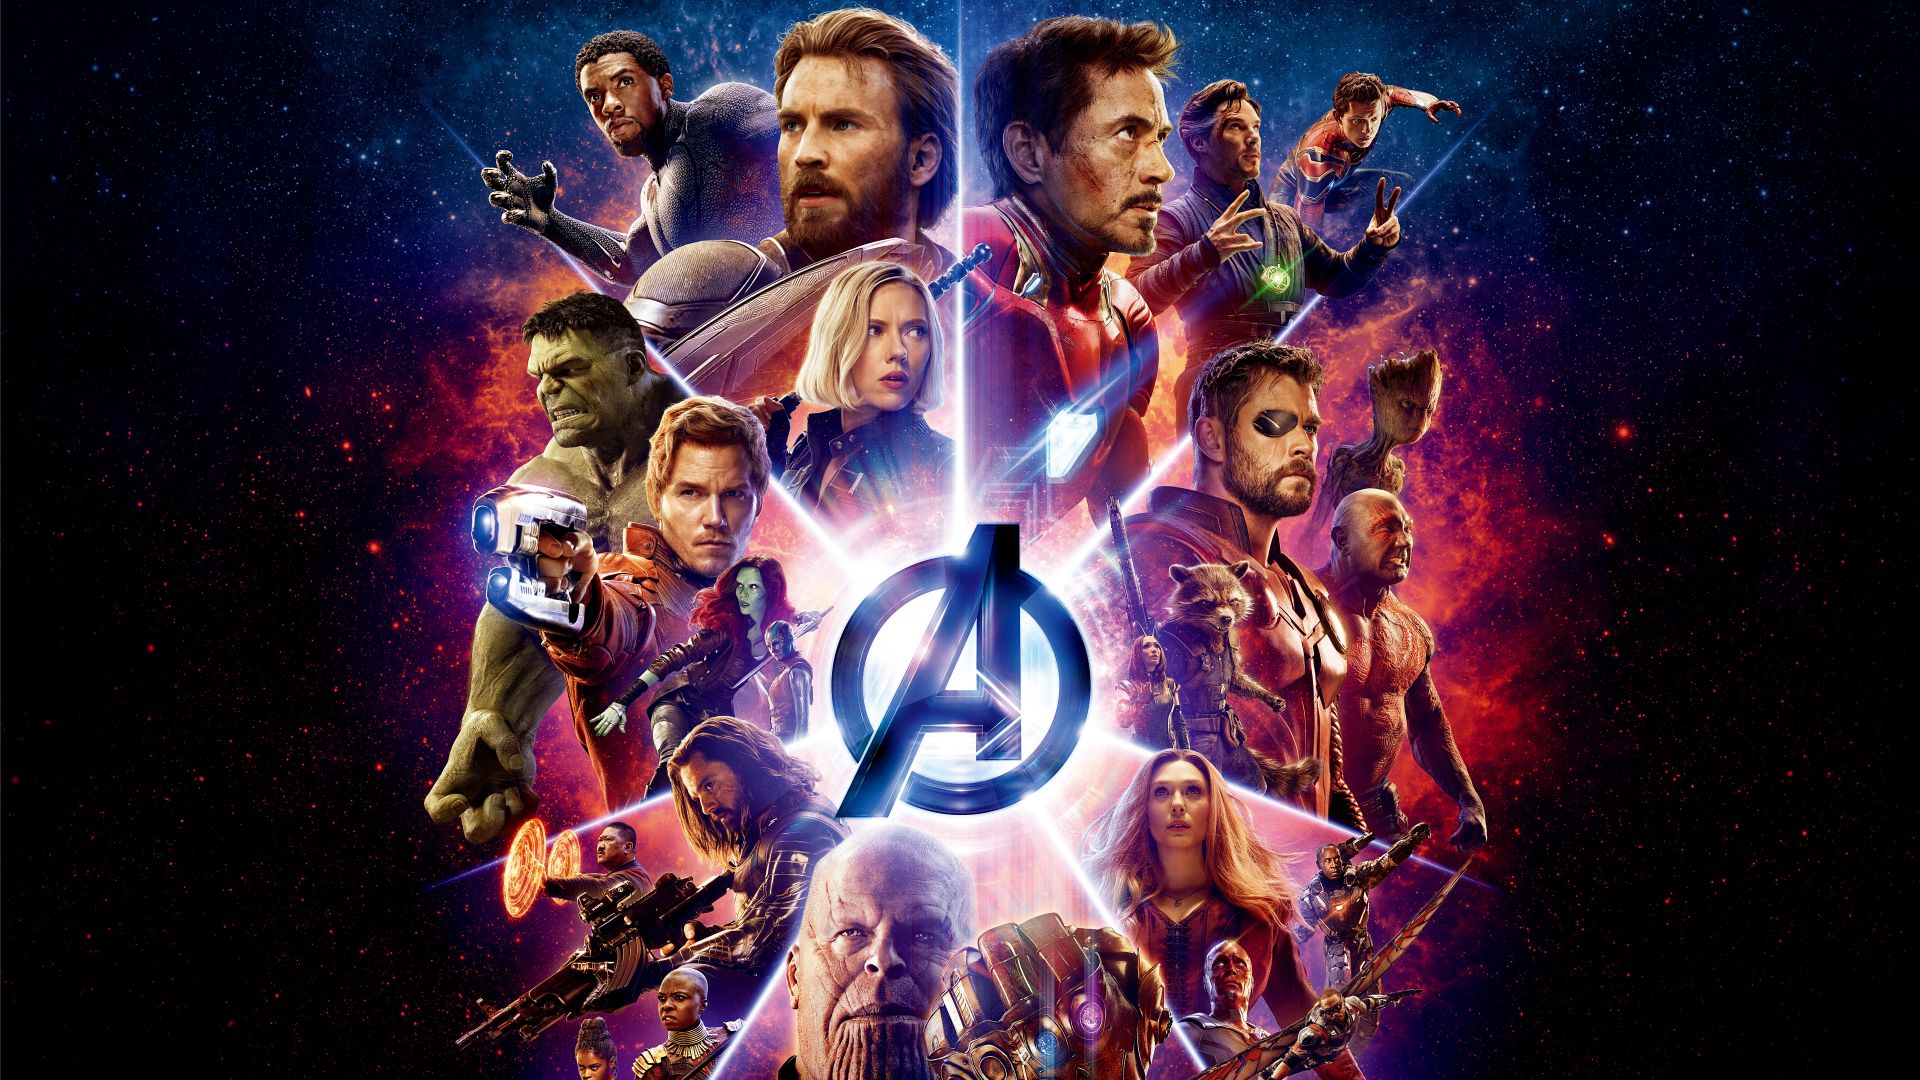 Мстители: Война бесконечности, Avengers: Infinity War, poster, 8k (horizontal)